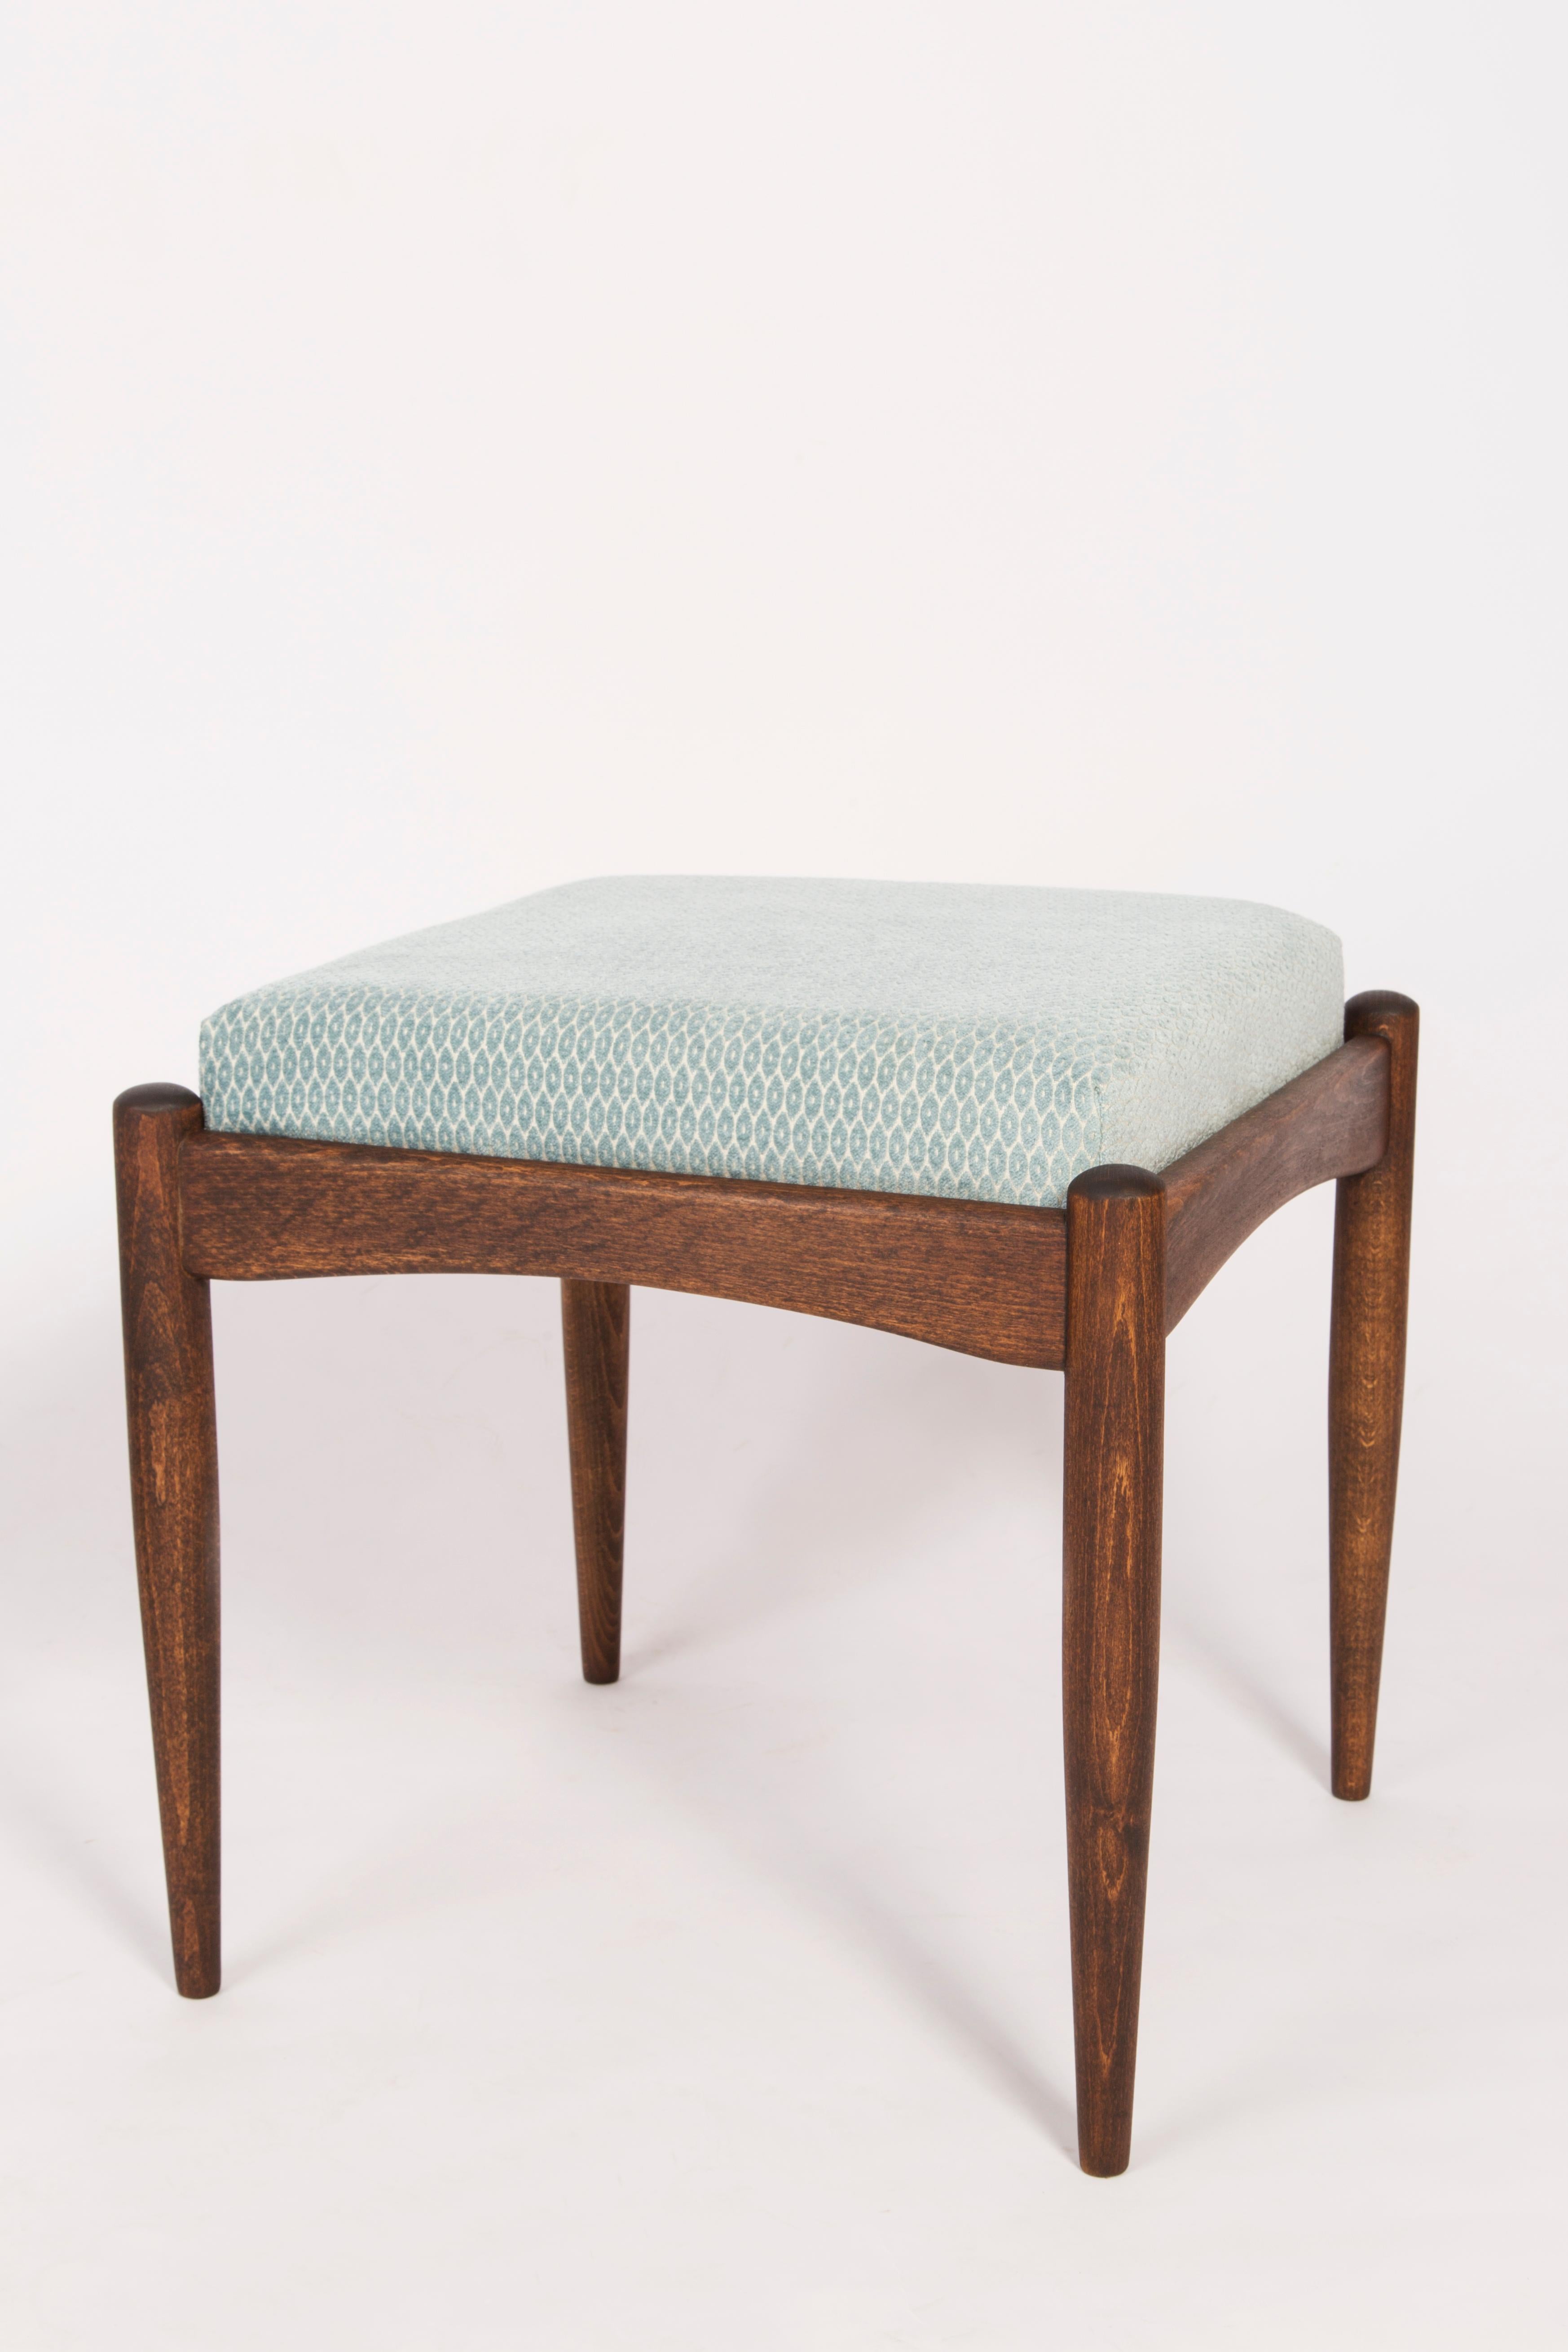 Midcentury Blue Velvet Armchair with Stool, Zenon Baczyk, 1960s For Sale 6